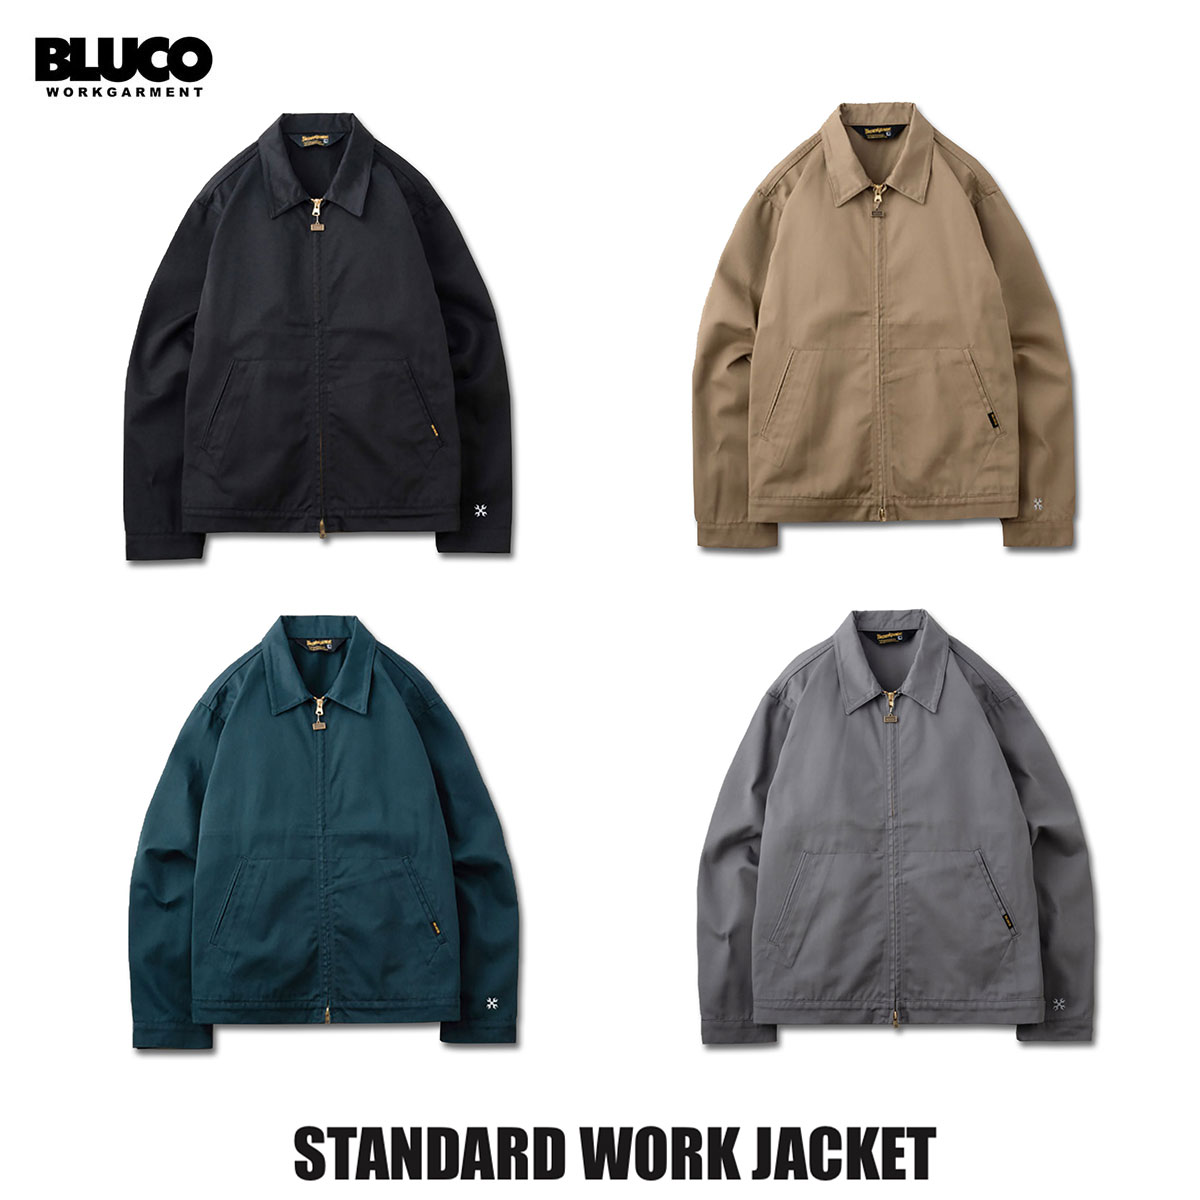 BLUCO(ブルコ) OL-31-001 STANDARD WORK JACKET 4色(BLK/KHK/NVY/L.GRY